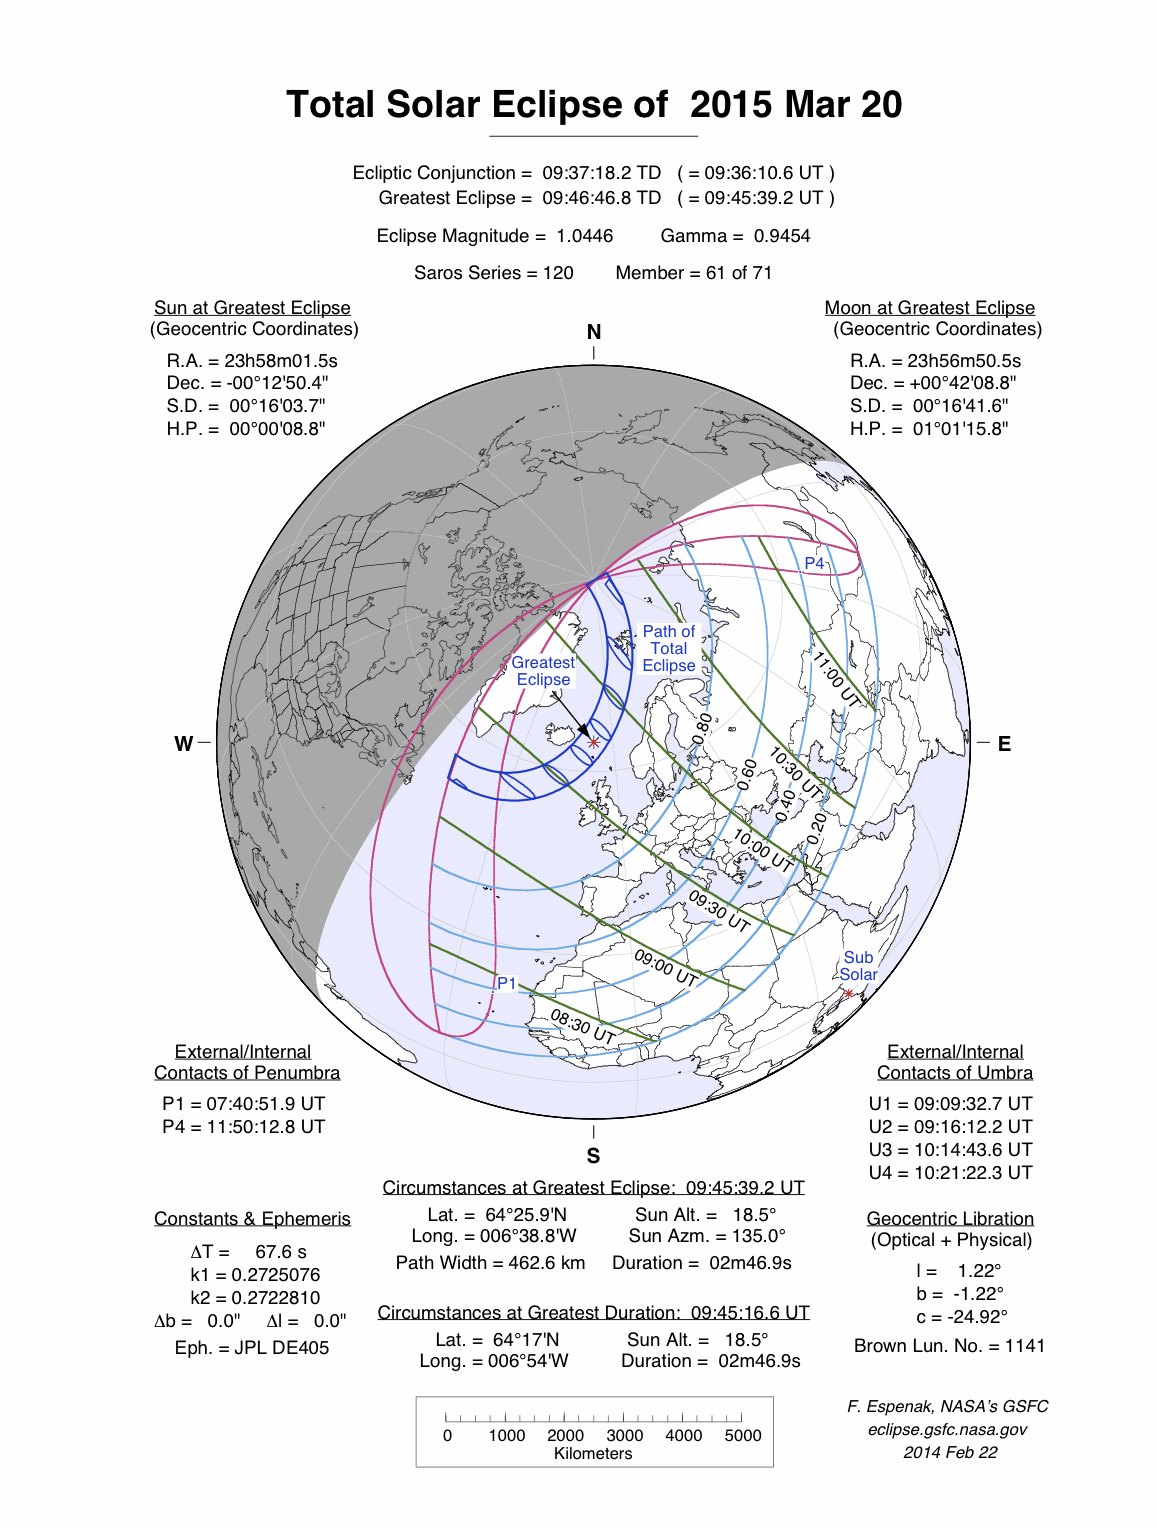 Nasa's Total Solar Eclipse 2015 Map